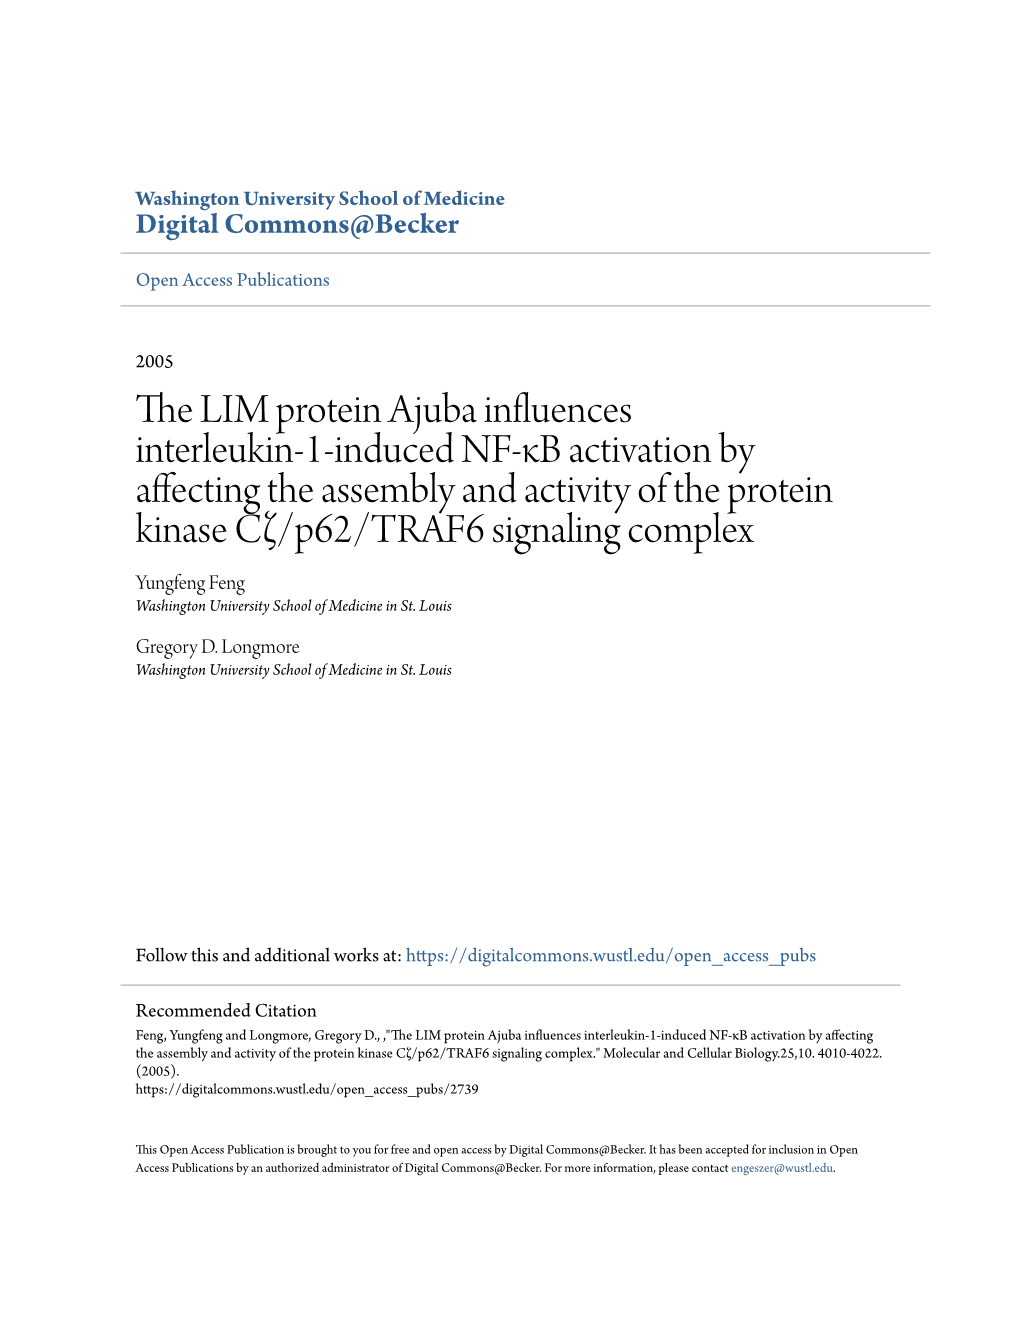 The LIM Protein Ajuba Influences Interleukin-1-Induced NF-Κb